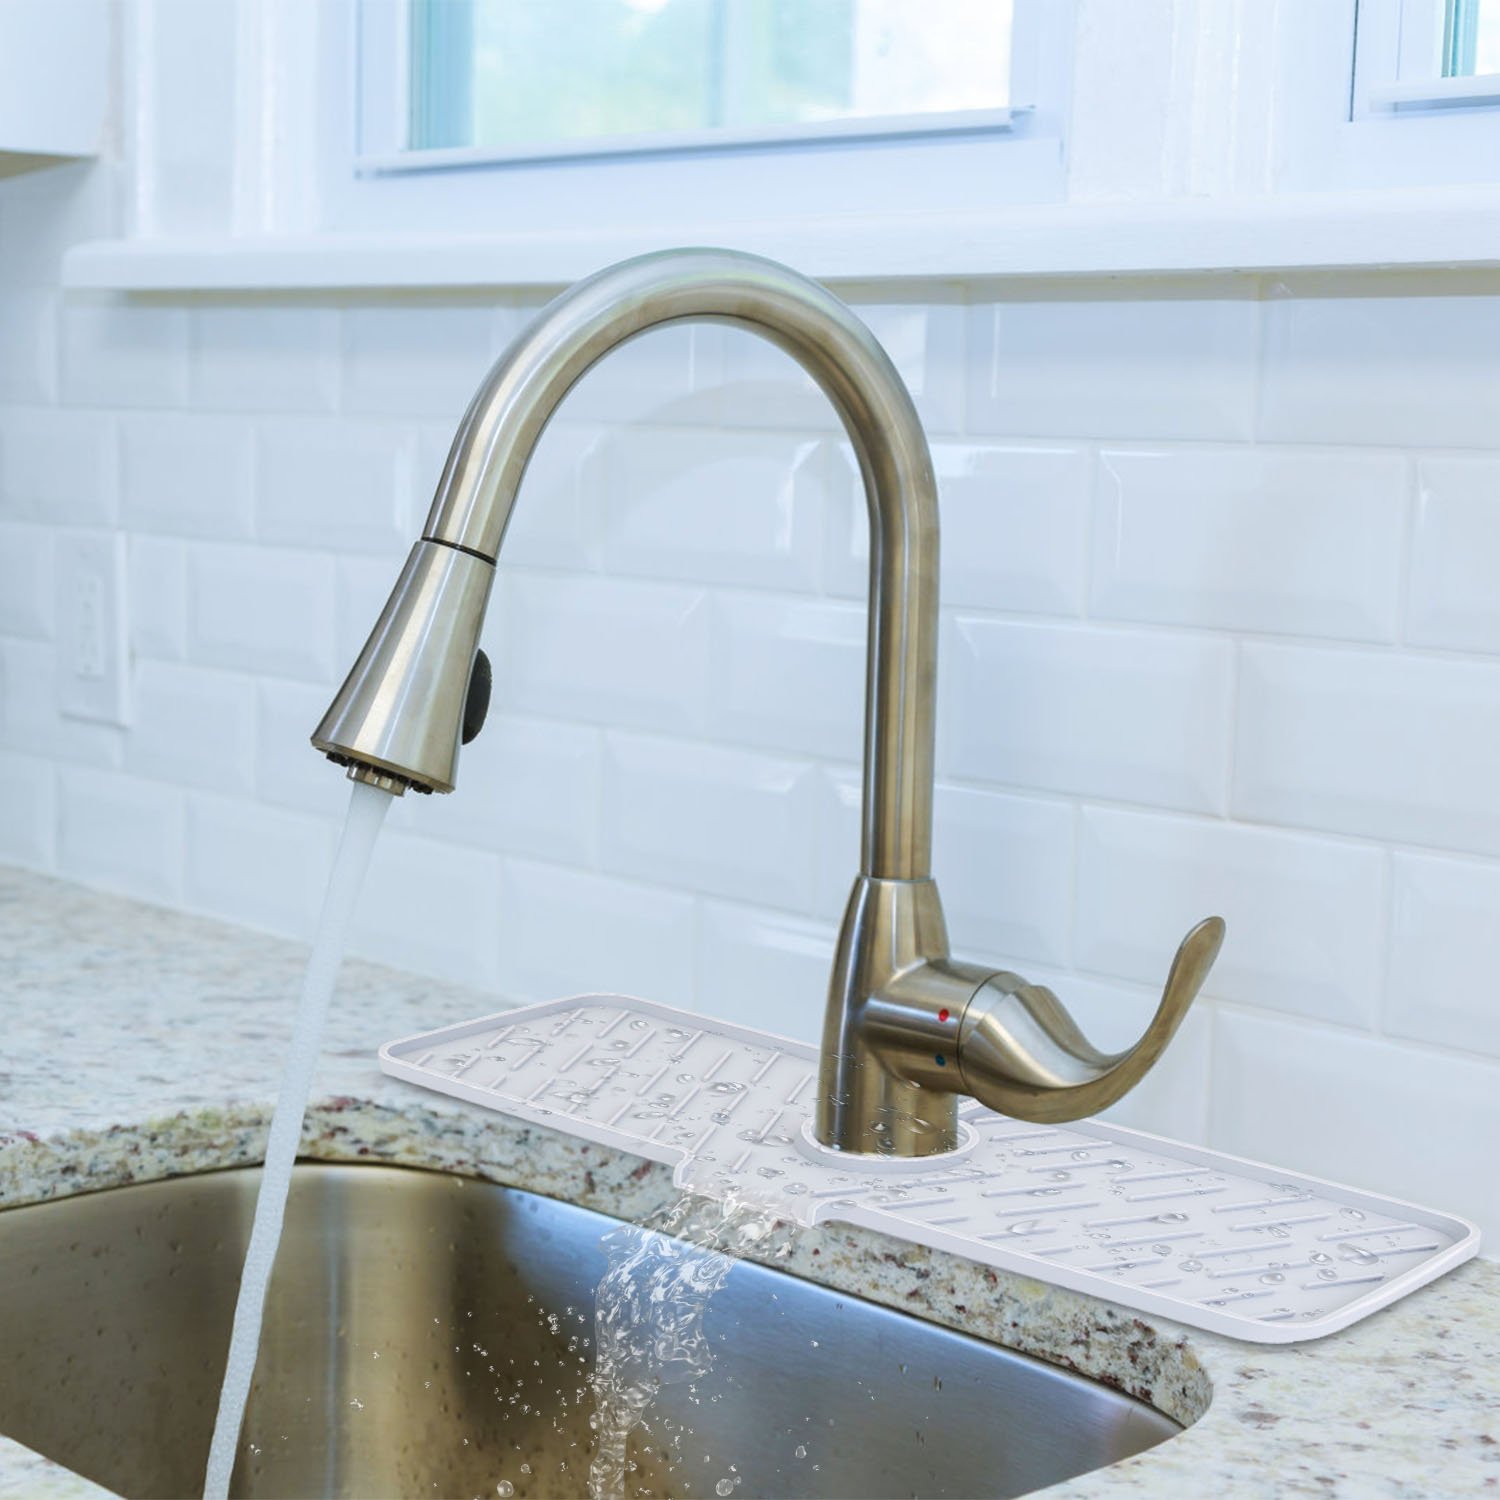 GLOBAL PHOENIX Silicone Faucet Mat Kitchen Sink Splash Guard Drain